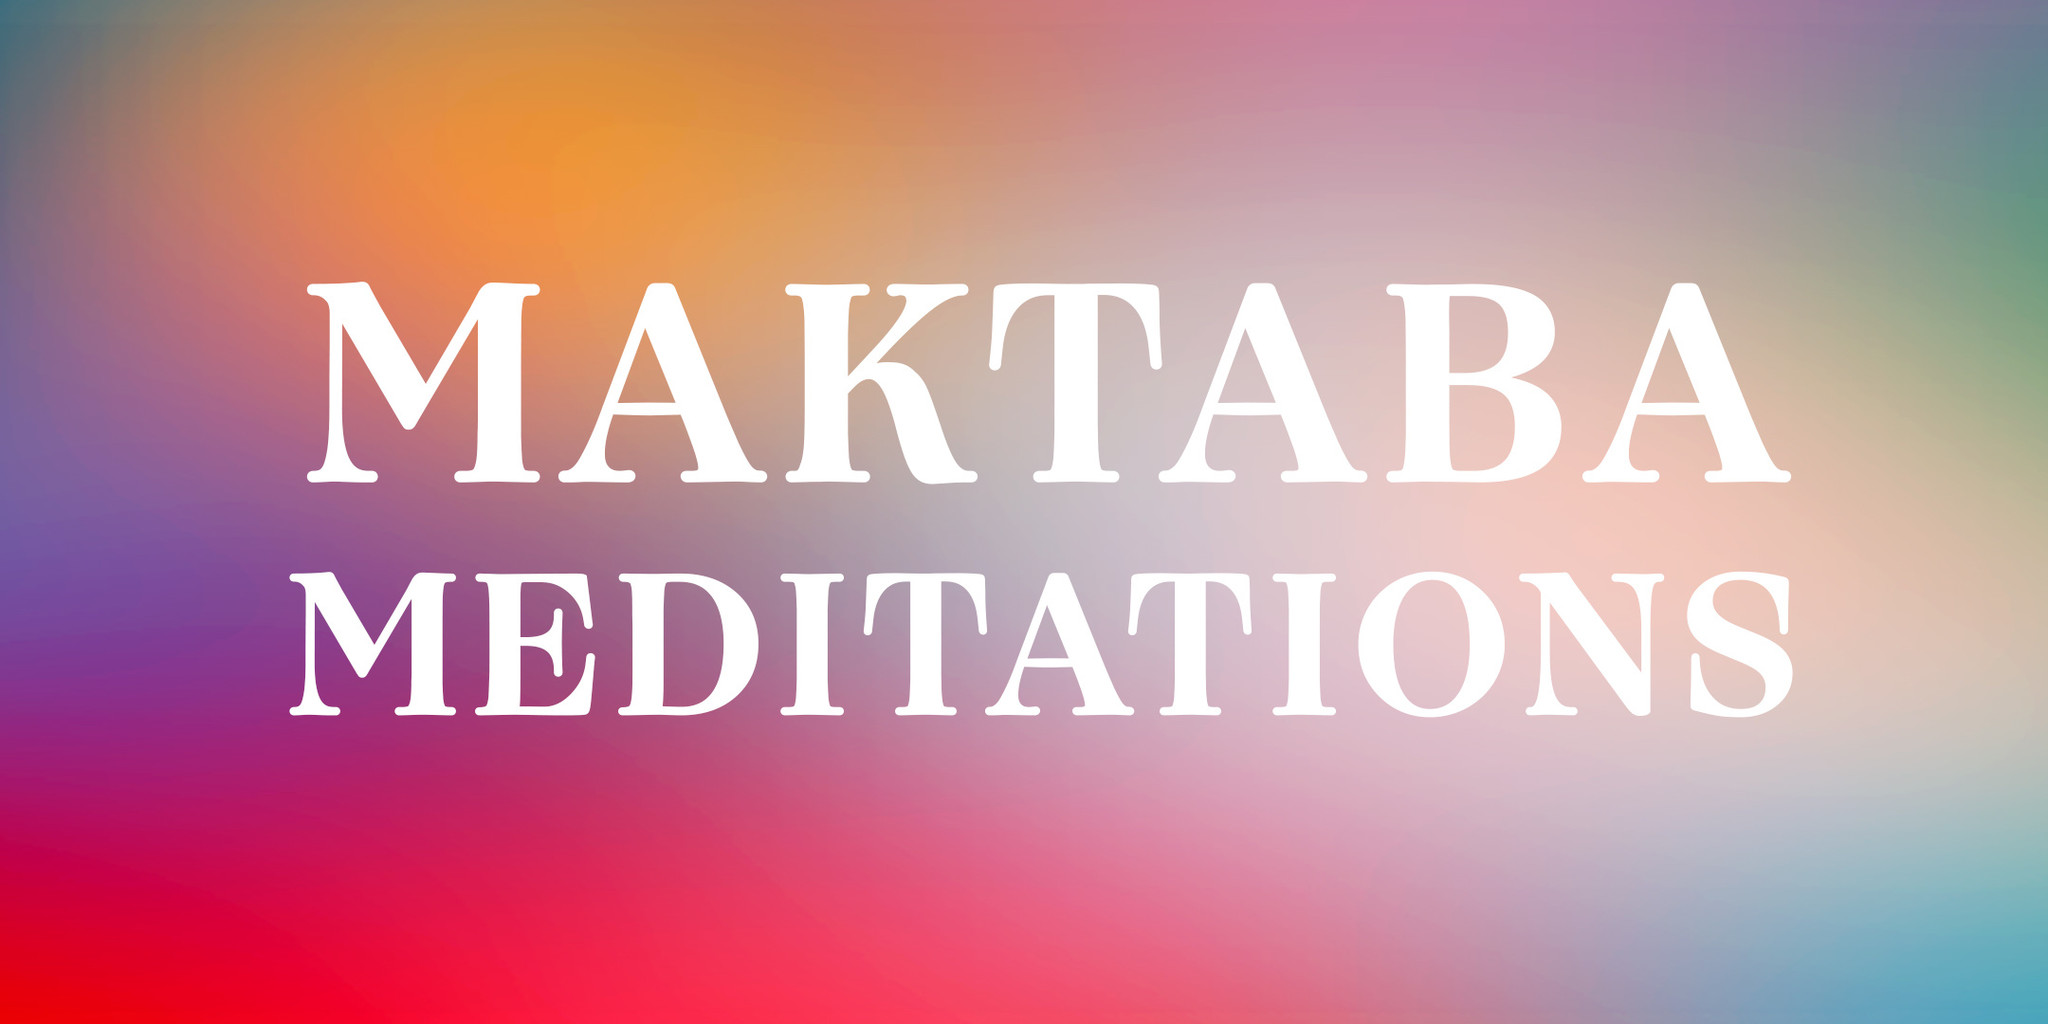 Méditations Maktaba : Respiration et bain de sons 